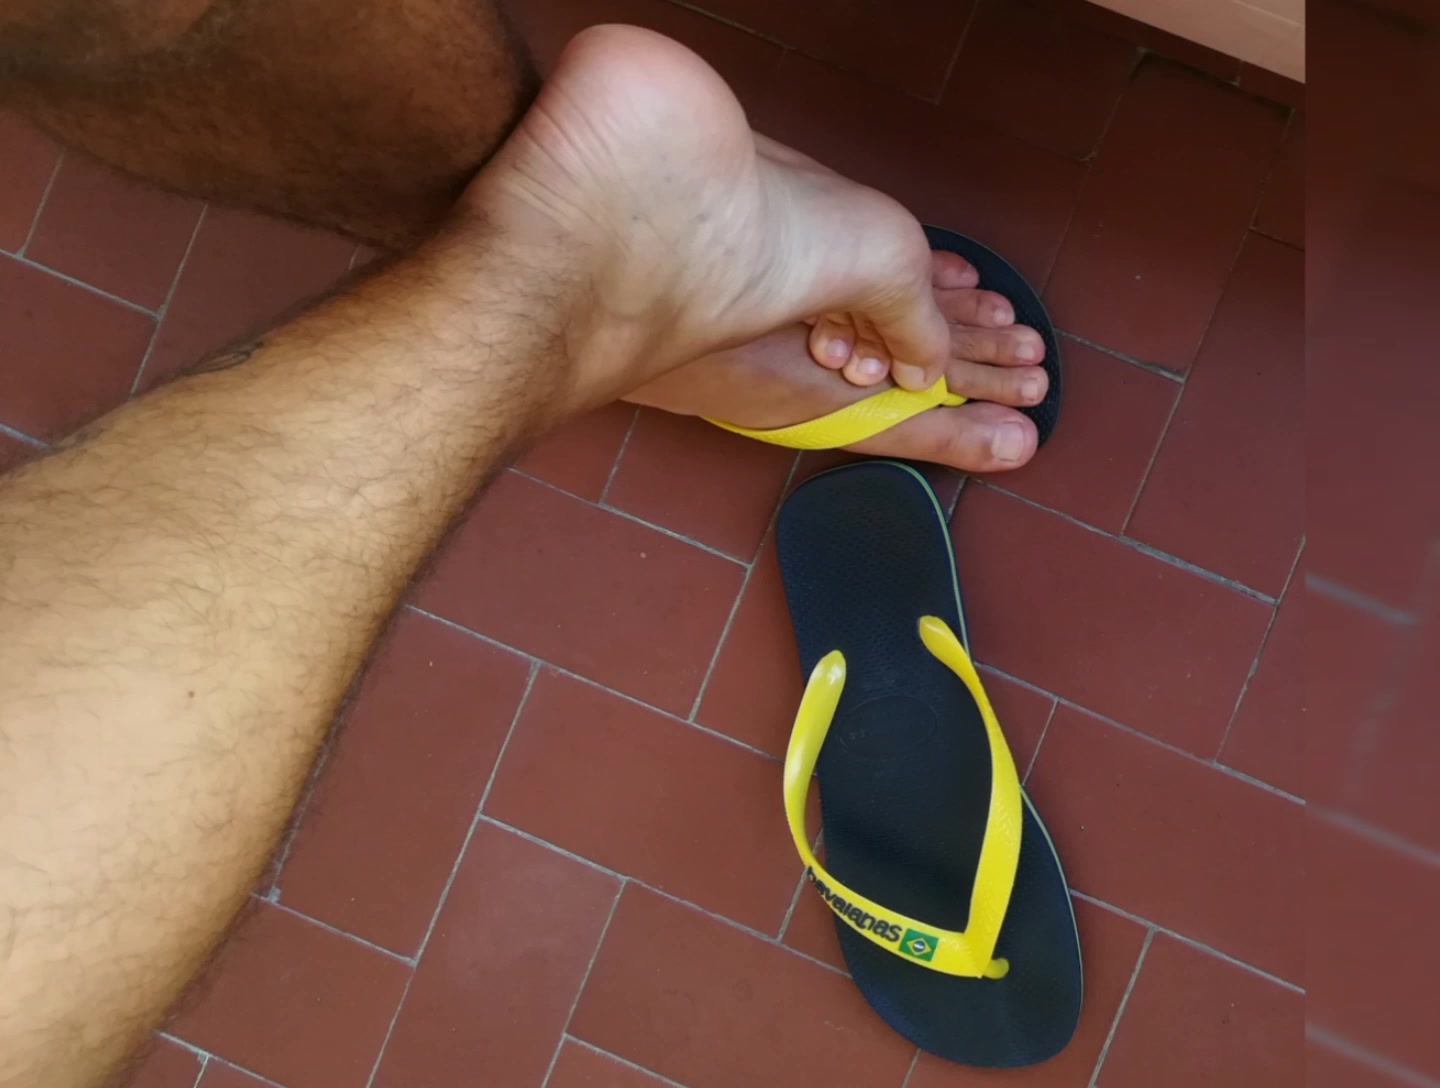 My feet - video 33